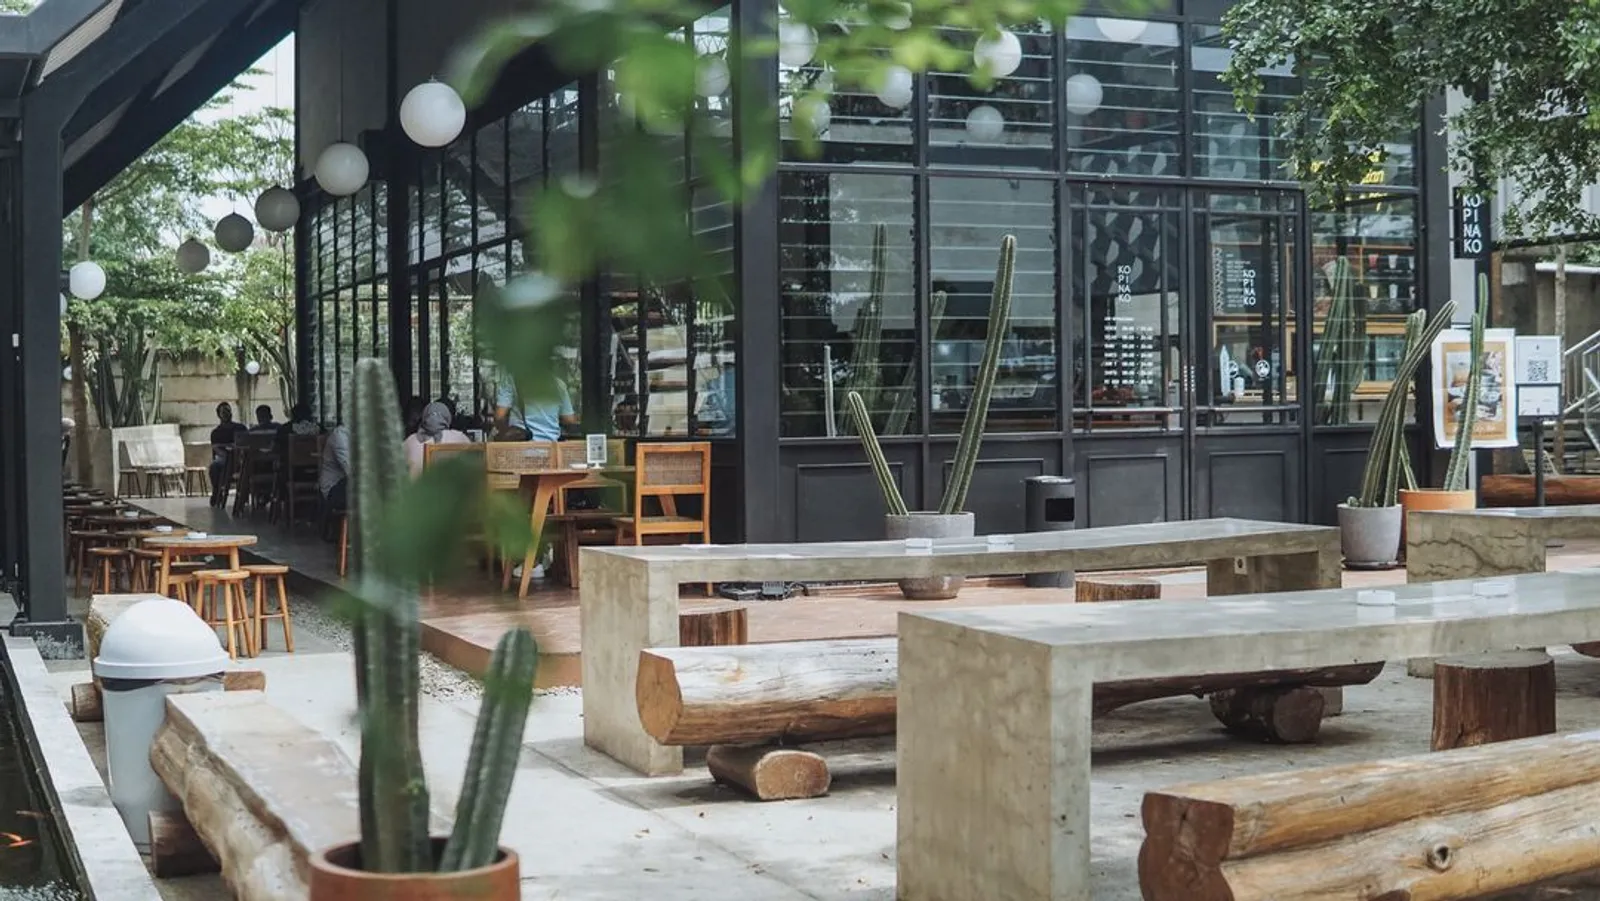 15 Cafe Terdekat di Depok yang Pas untuk Kerja dan Nongkrong